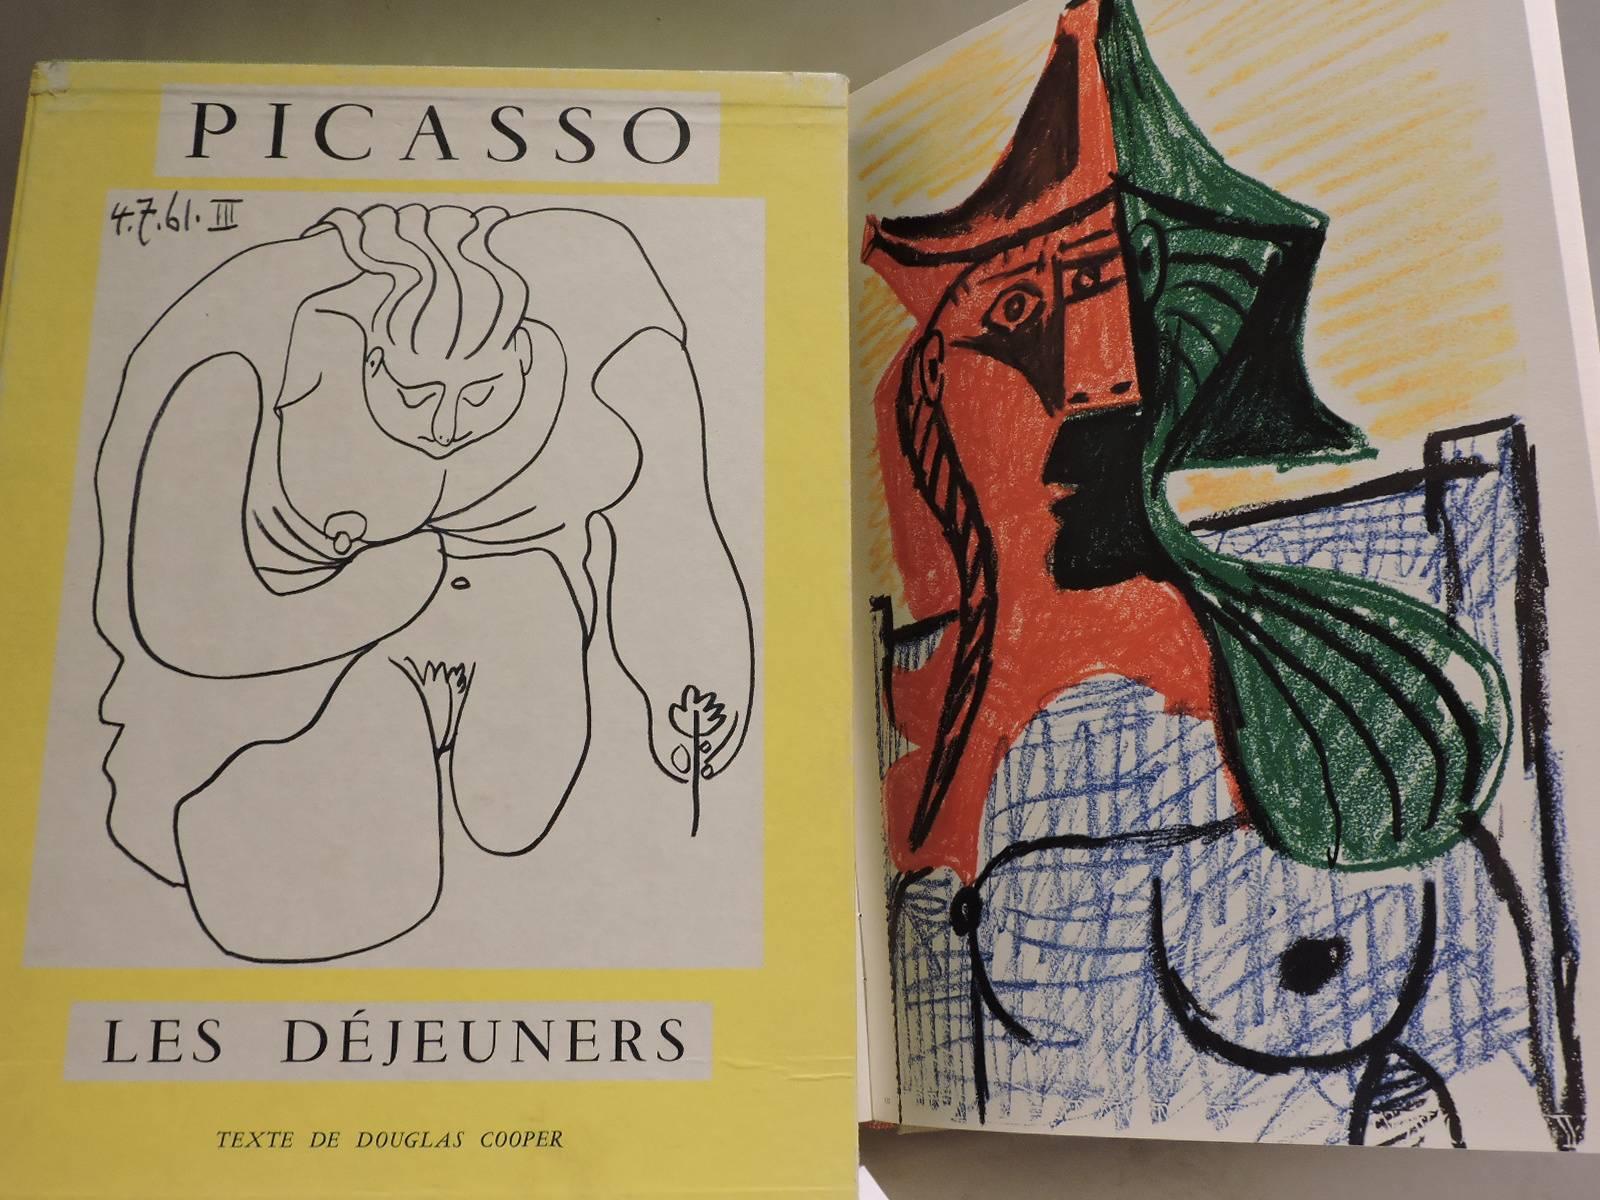 Mid-20th Century Picasso, Les Dejeuners, Editions Cercle D'Art, Paris, 1962, First Edition